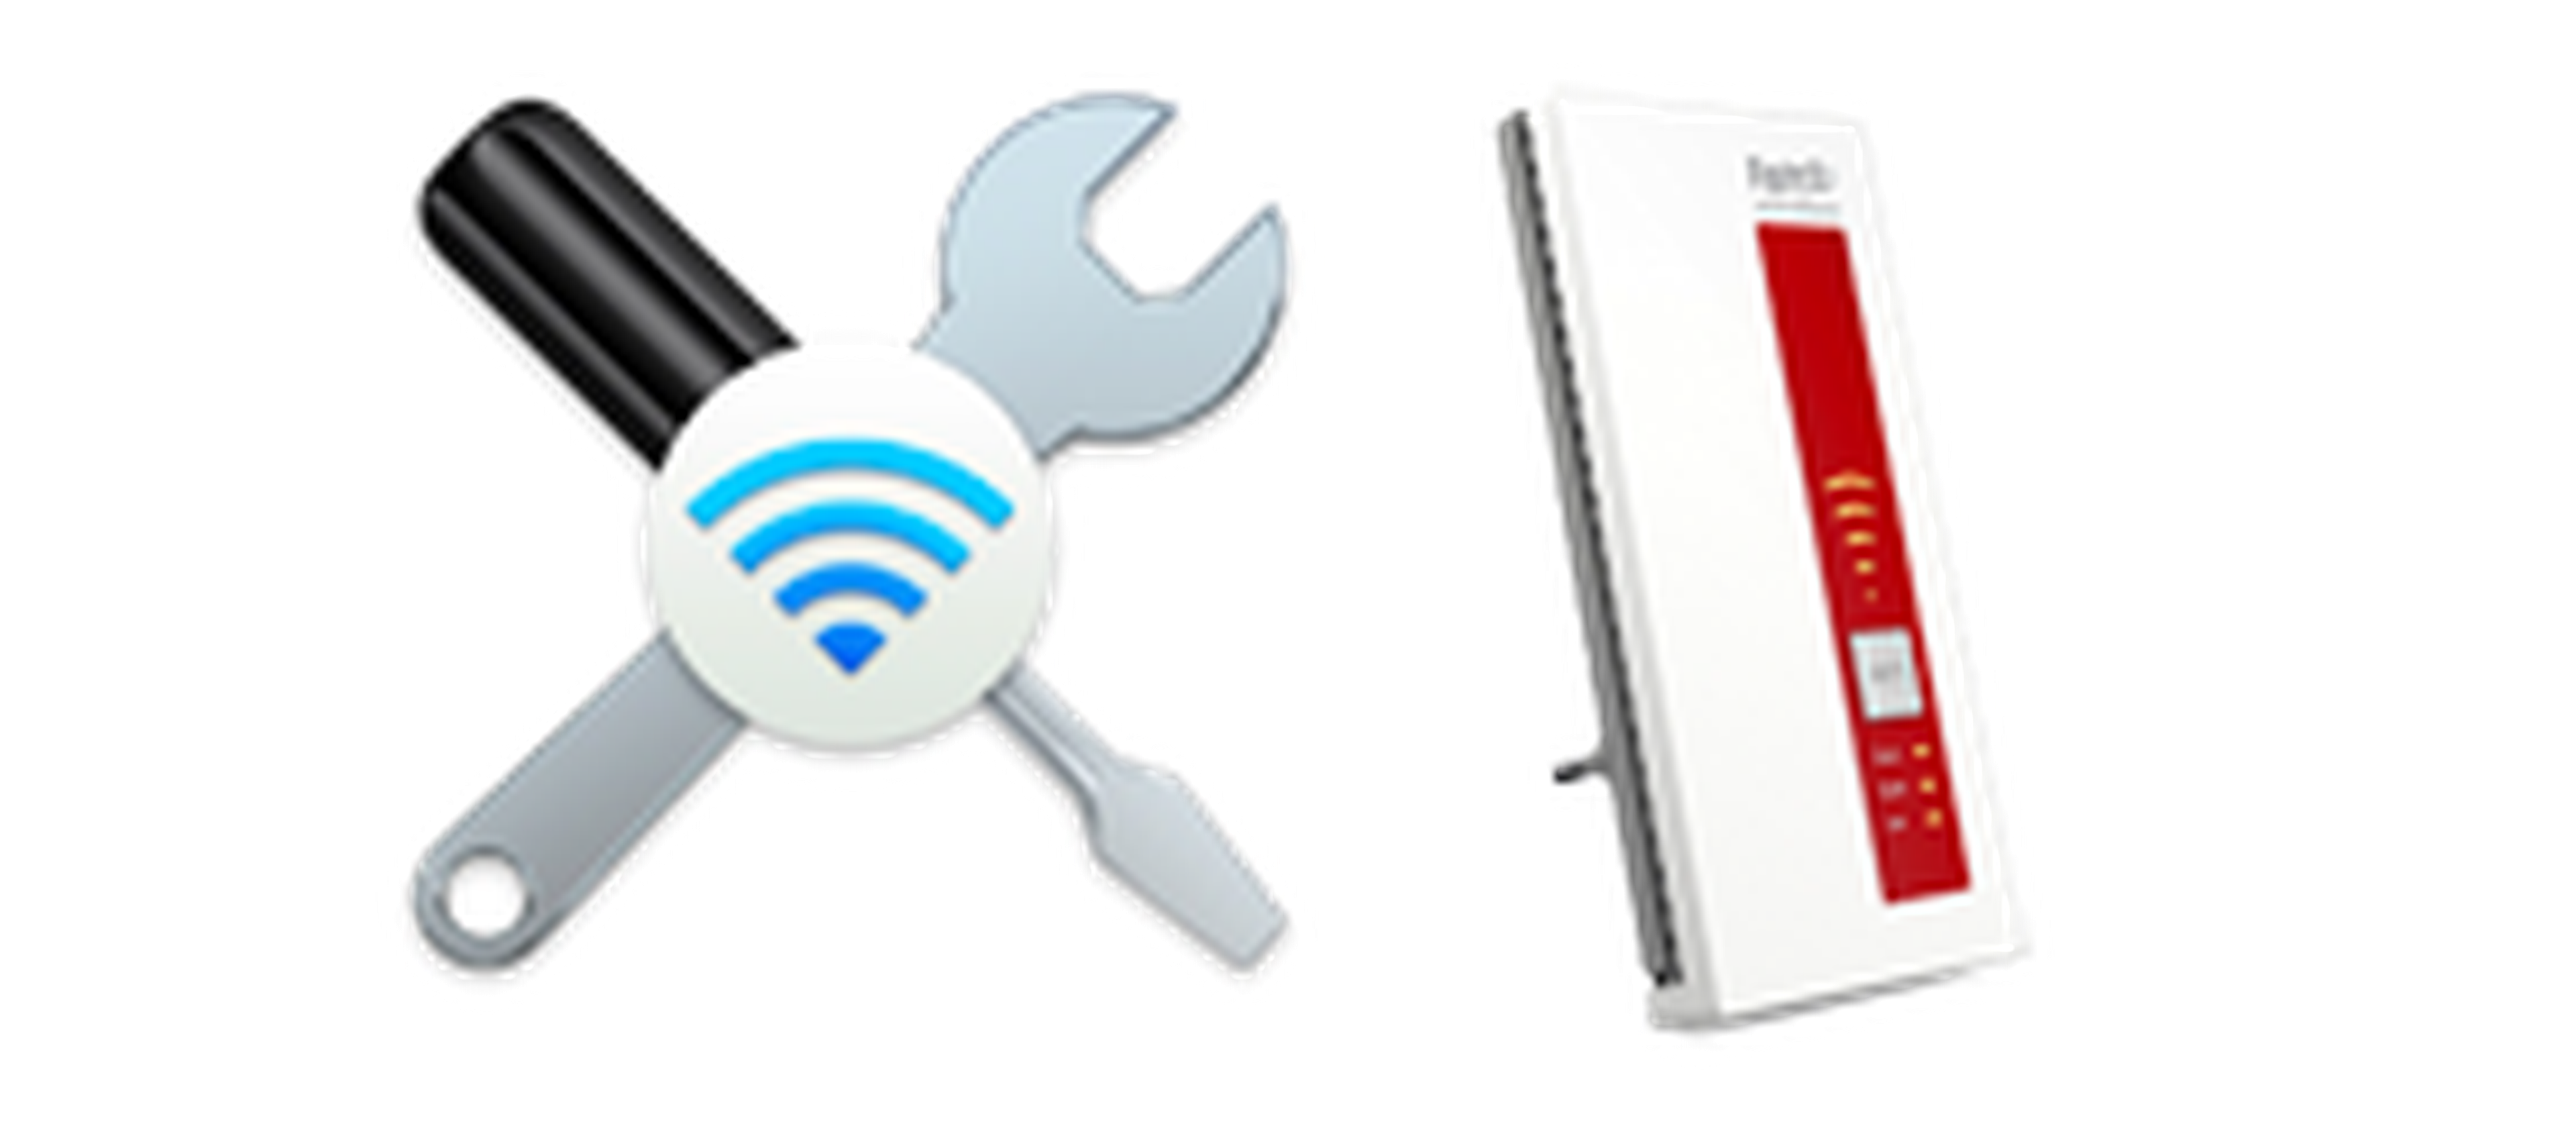 Cómo configurar tu red inalámbrica WiFi en tu router correctamente